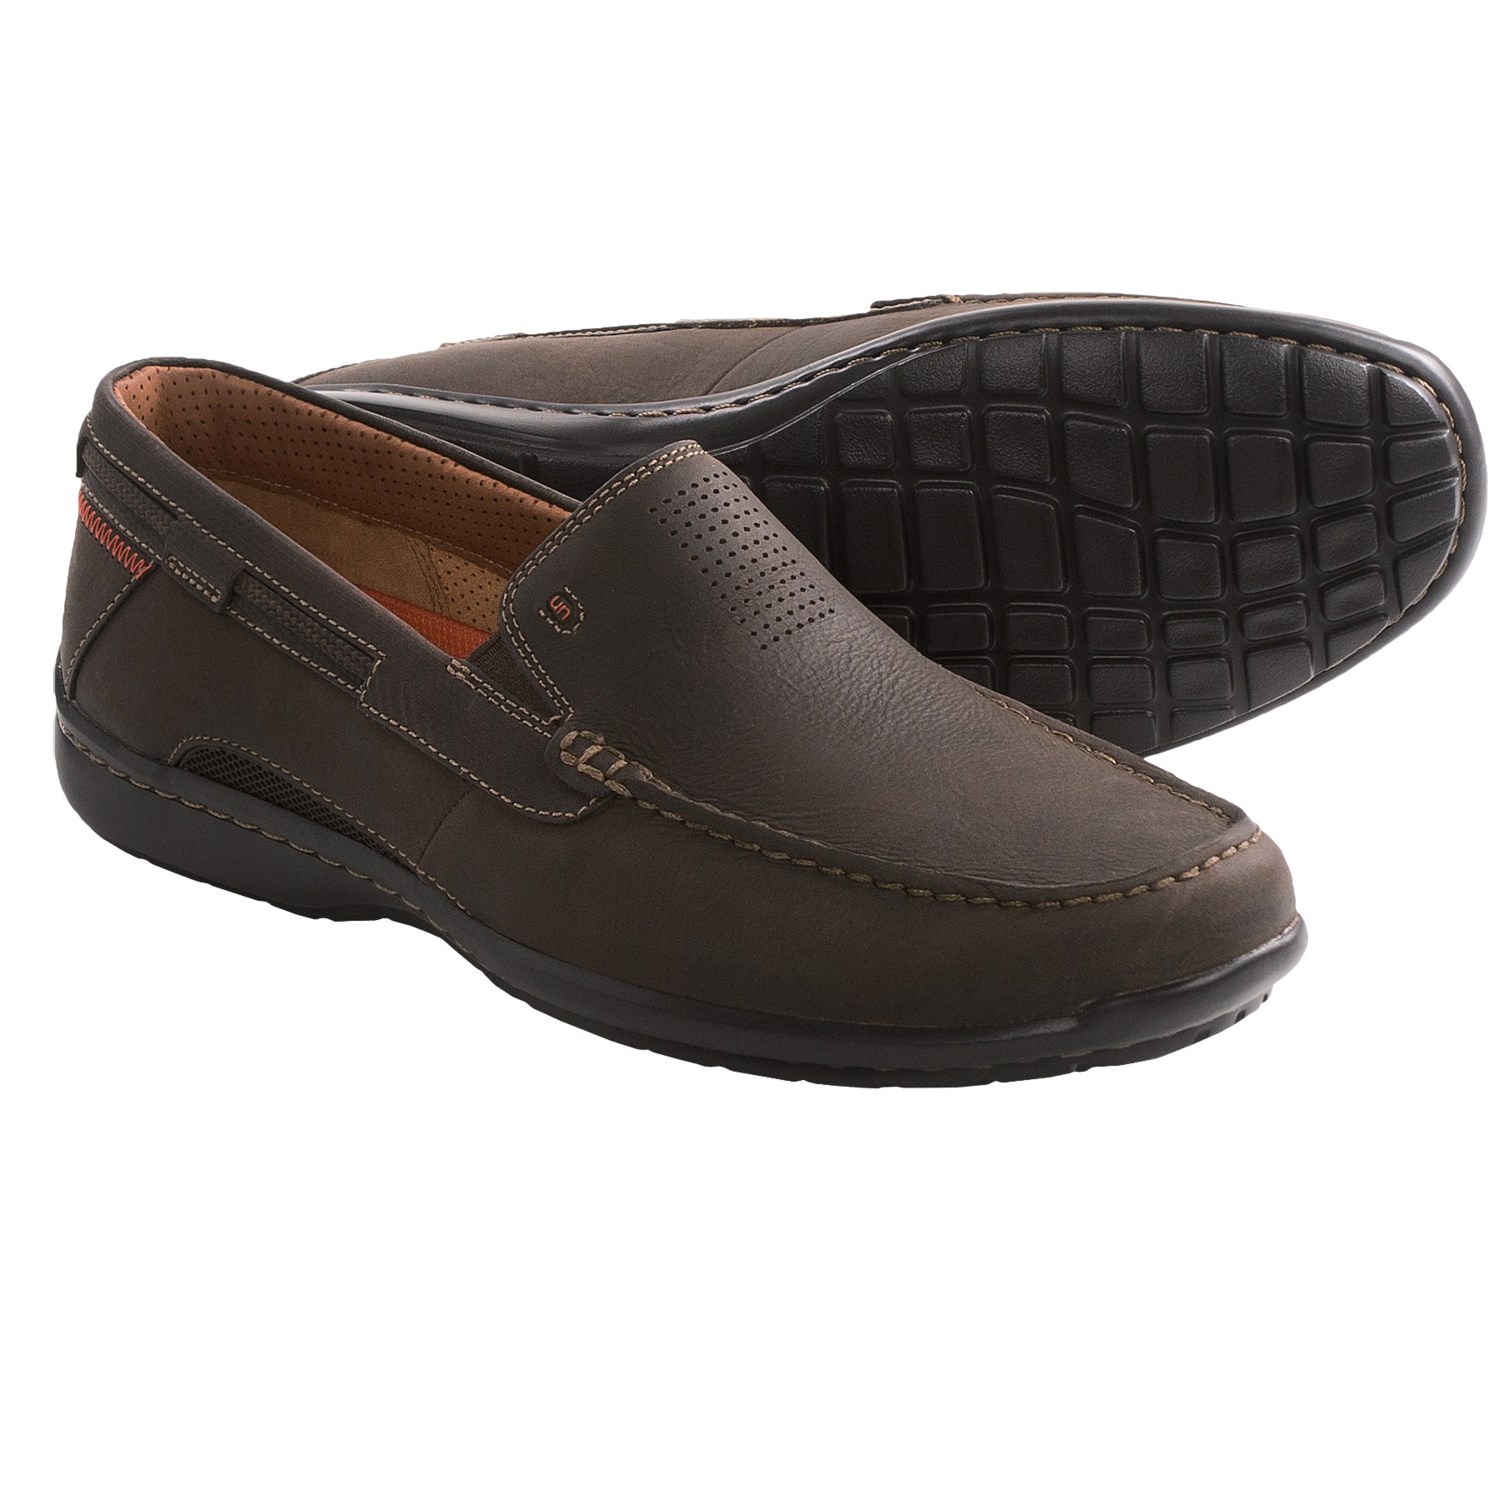 Aerosole Sandals: Available Clarks Sandals For Men